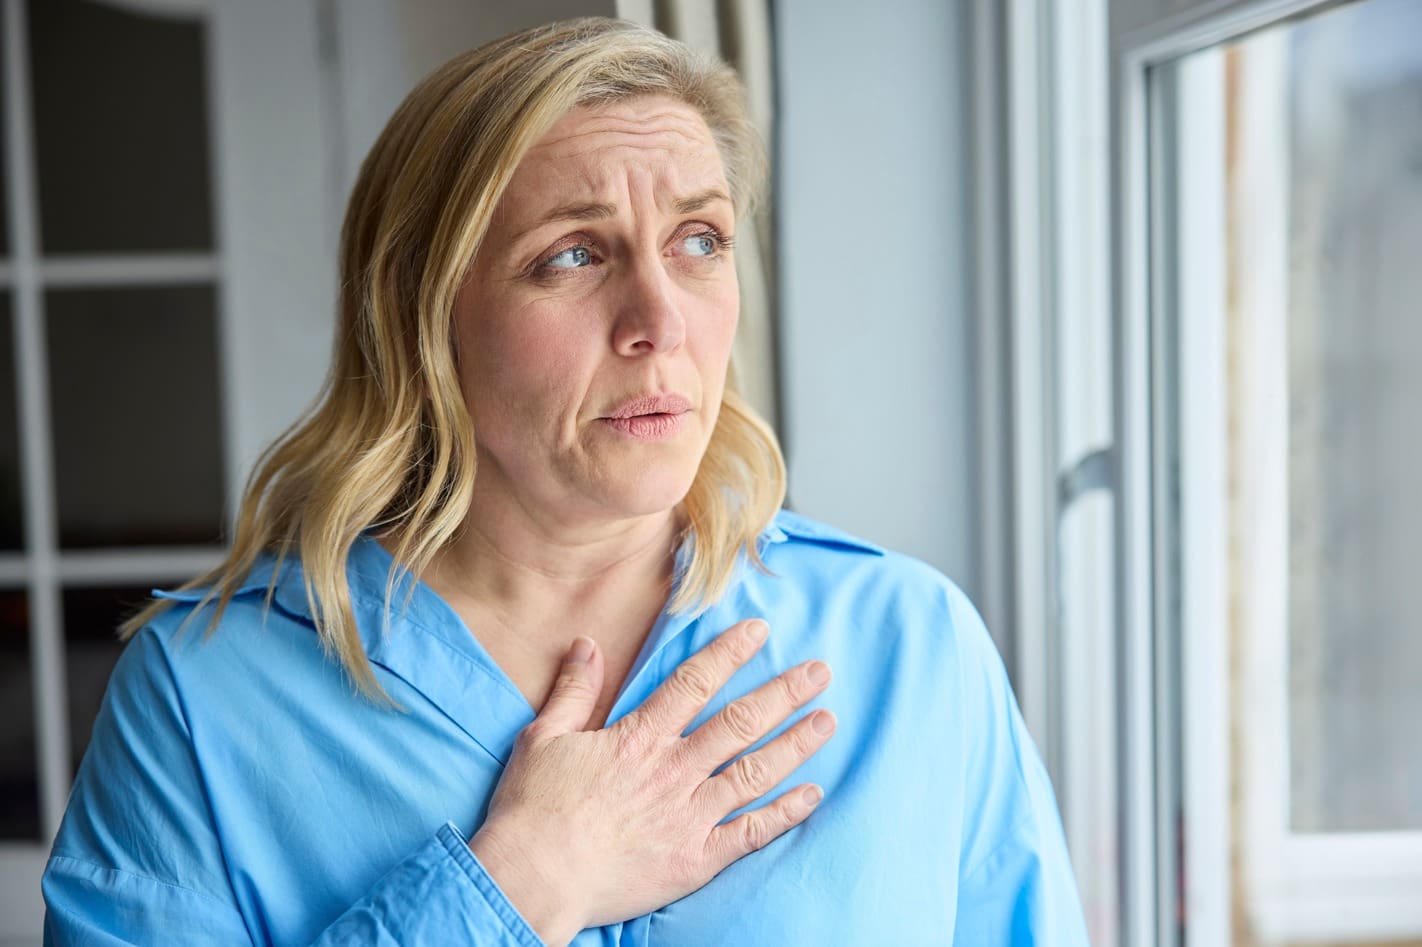 Hrt and heart health in menopausal women